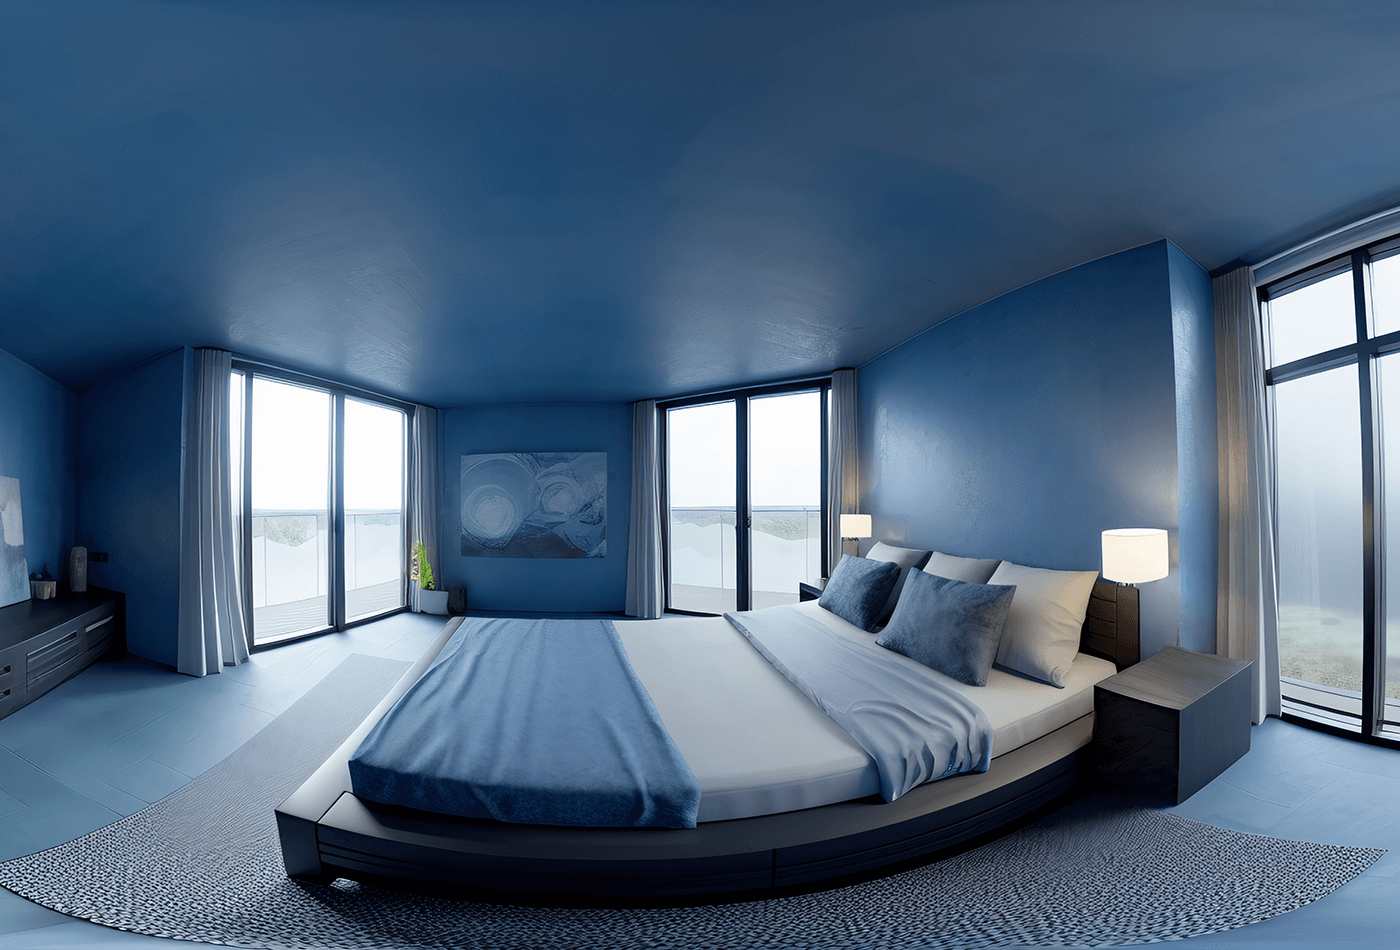 25 Blue Bedroom Design Ideas To Look Lavish!